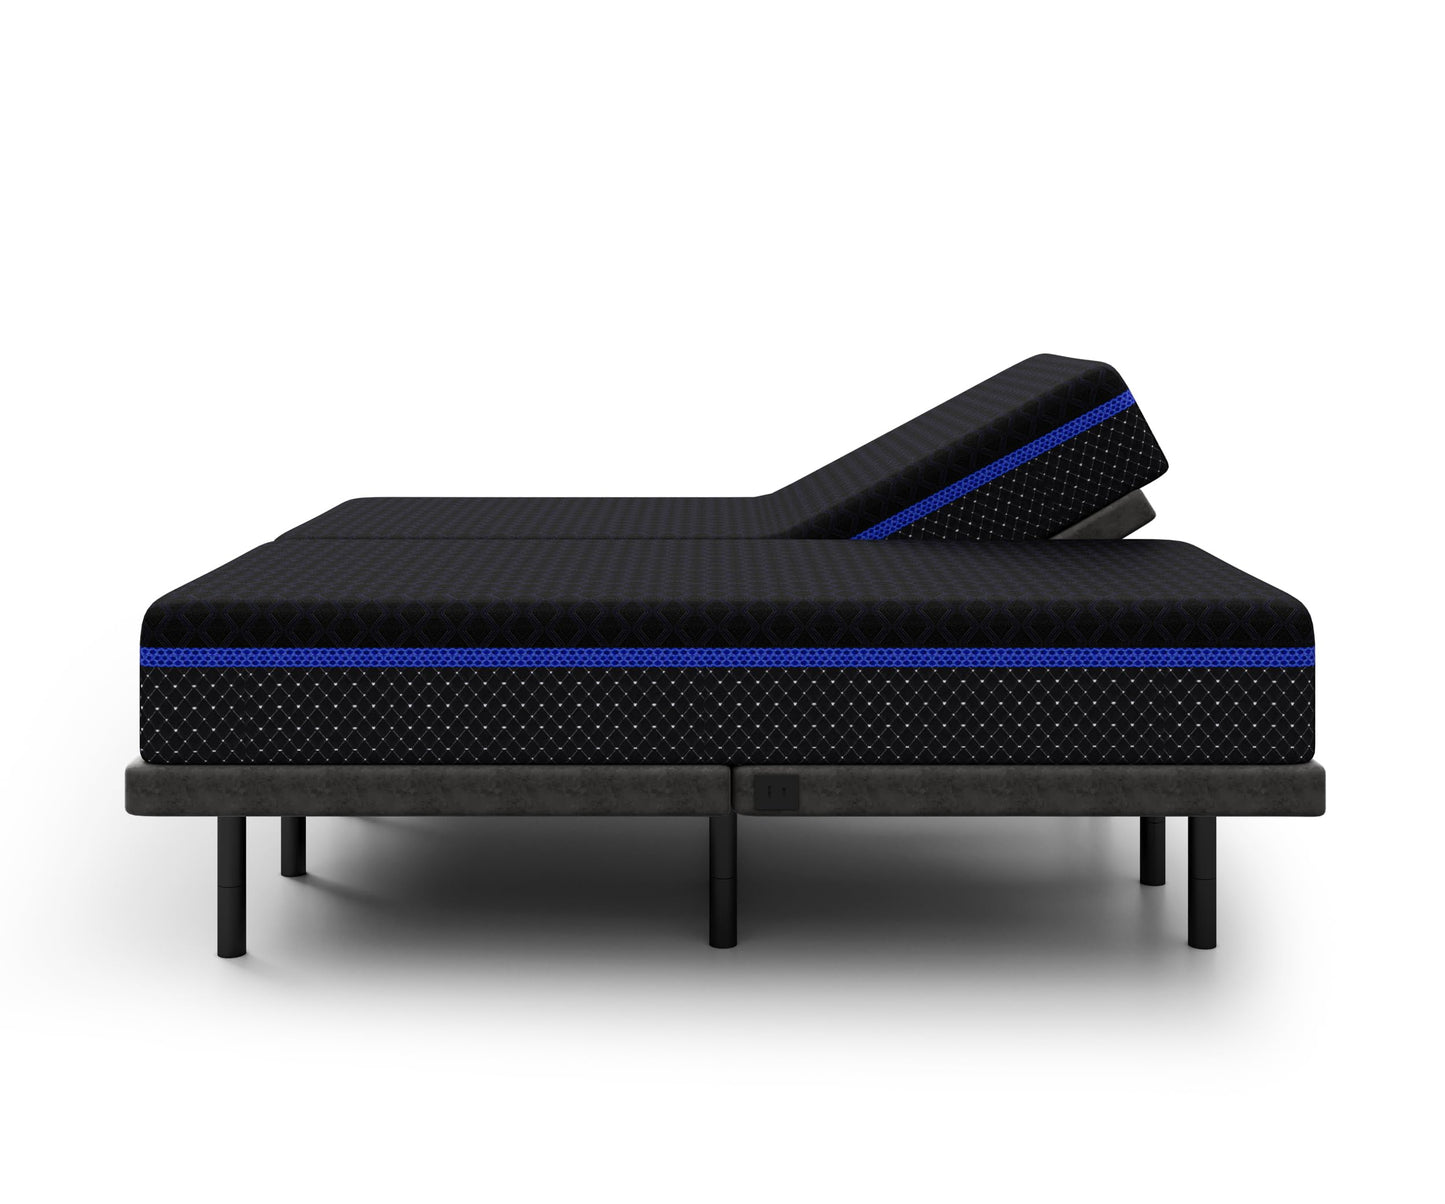 iDealBed S4 Nebula Luxury Hybrid Mattress + 4i Custom Adjustable Bed Sleep System, Comfort, Cooling & Support, Advanced Silent Operation, Massage (Medium Firm, Split Queen)